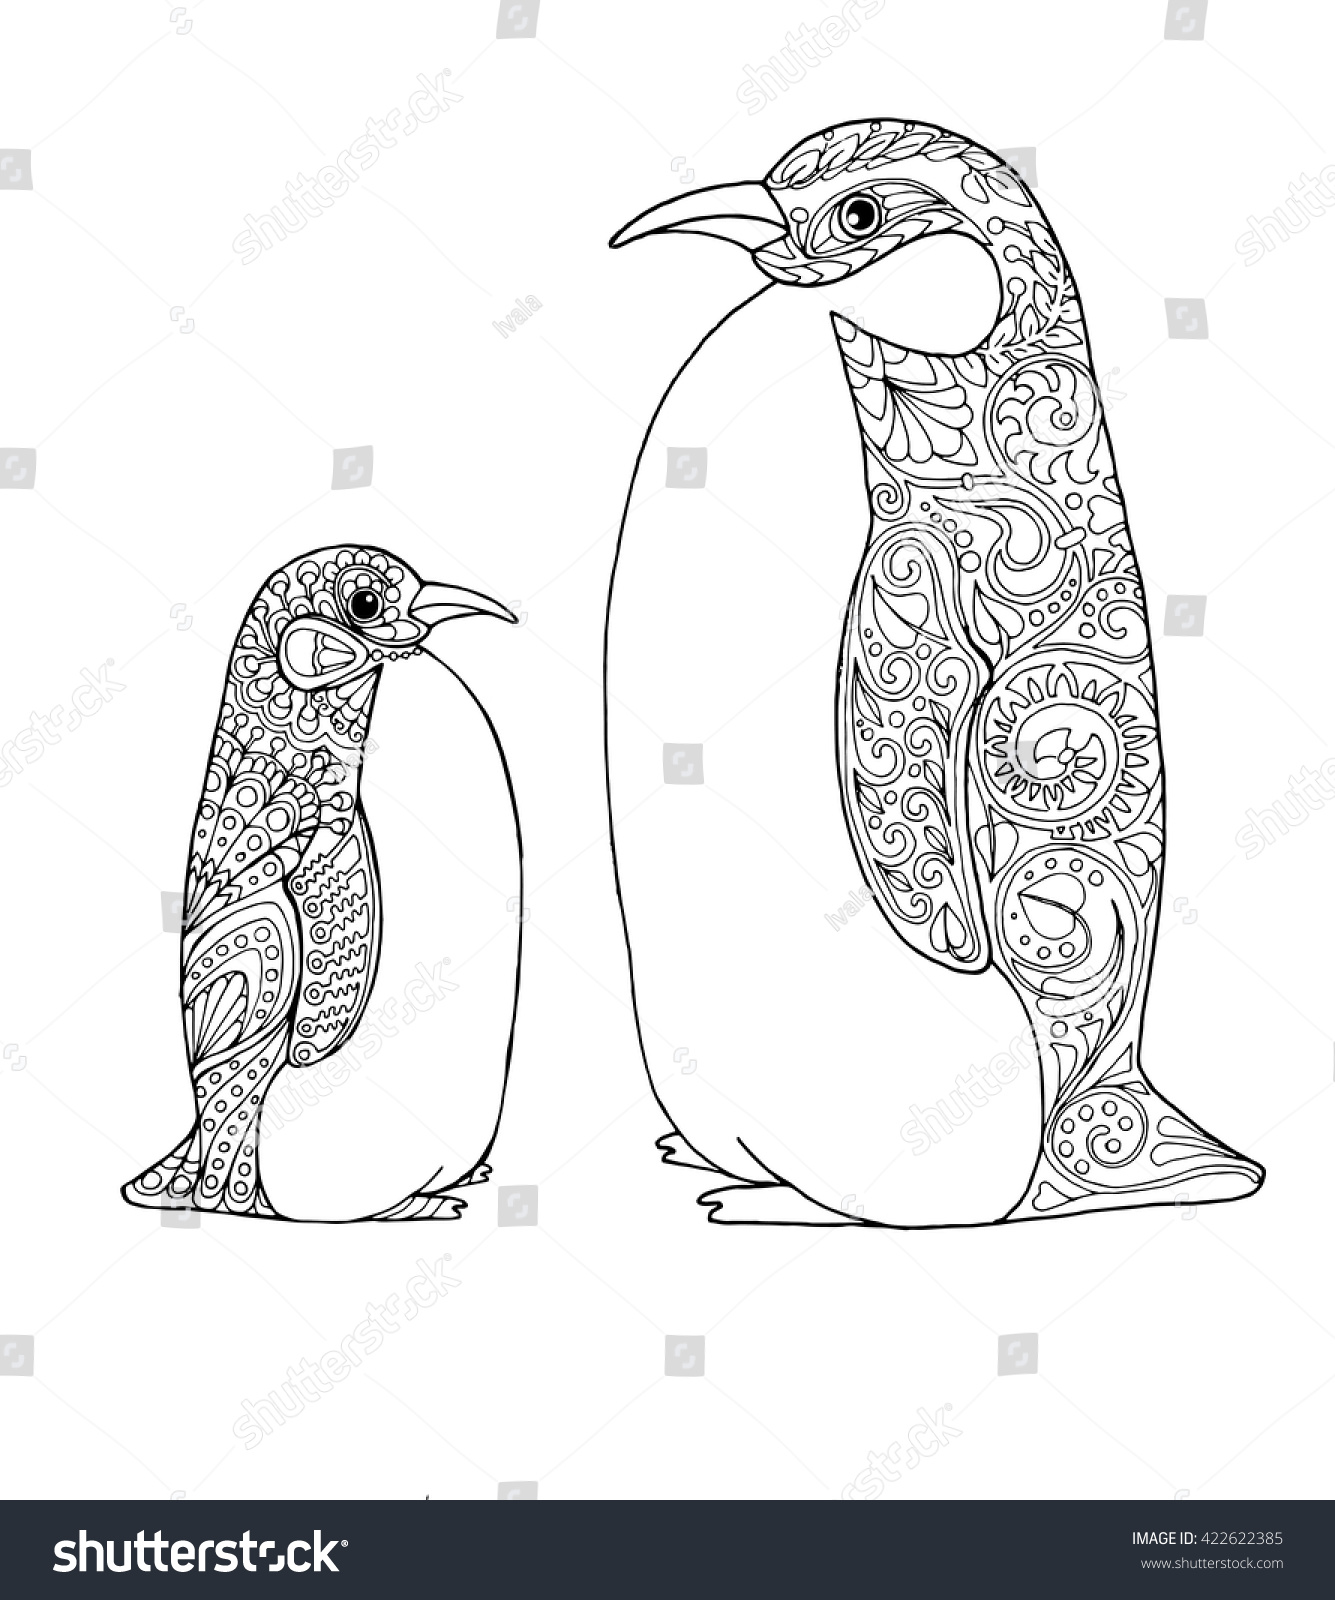 Image result for adult coloring penguins